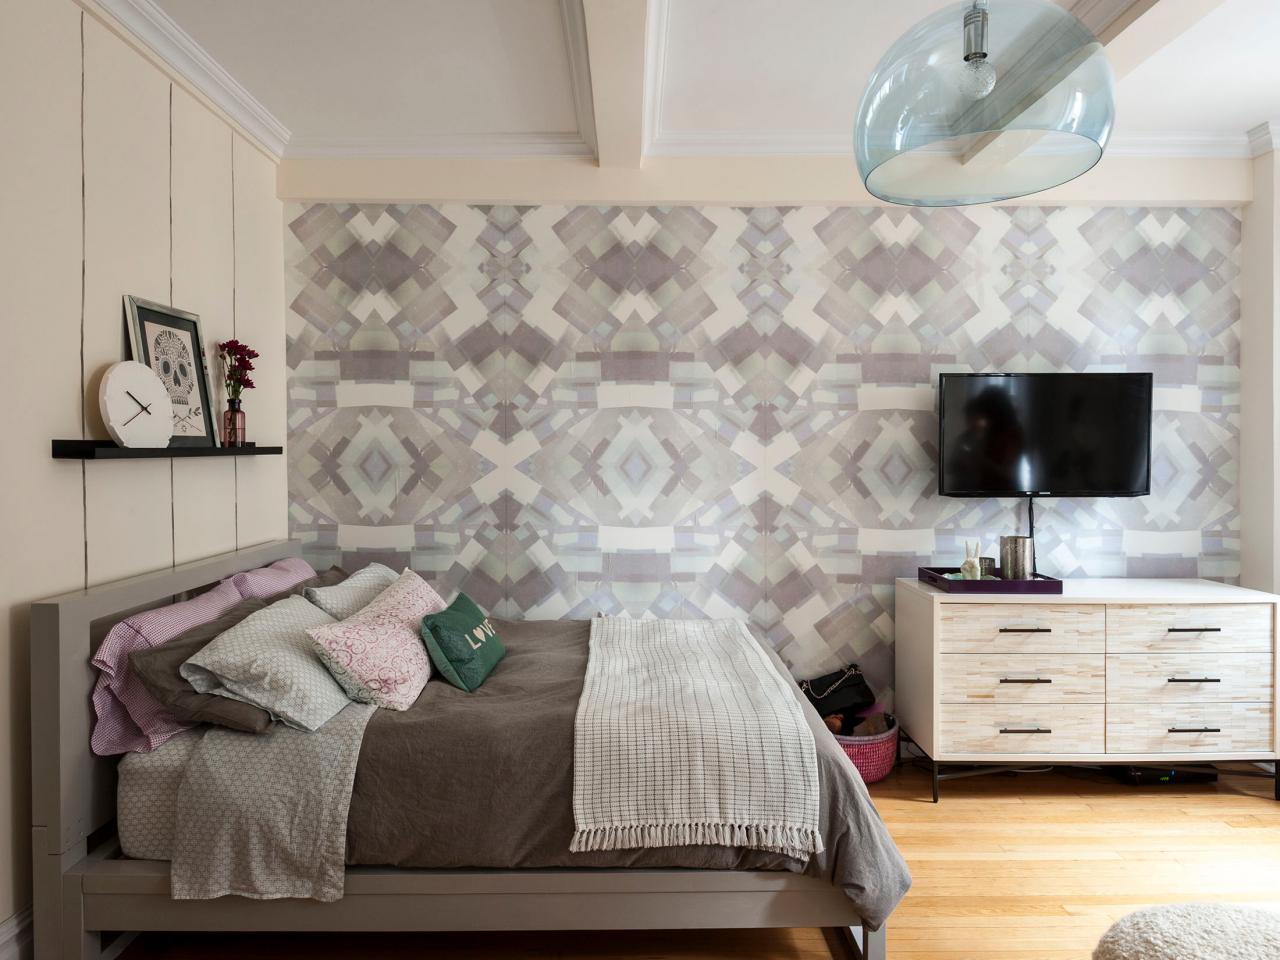 DIY Makeover: This renter glammed up her one-bedroom with vintage